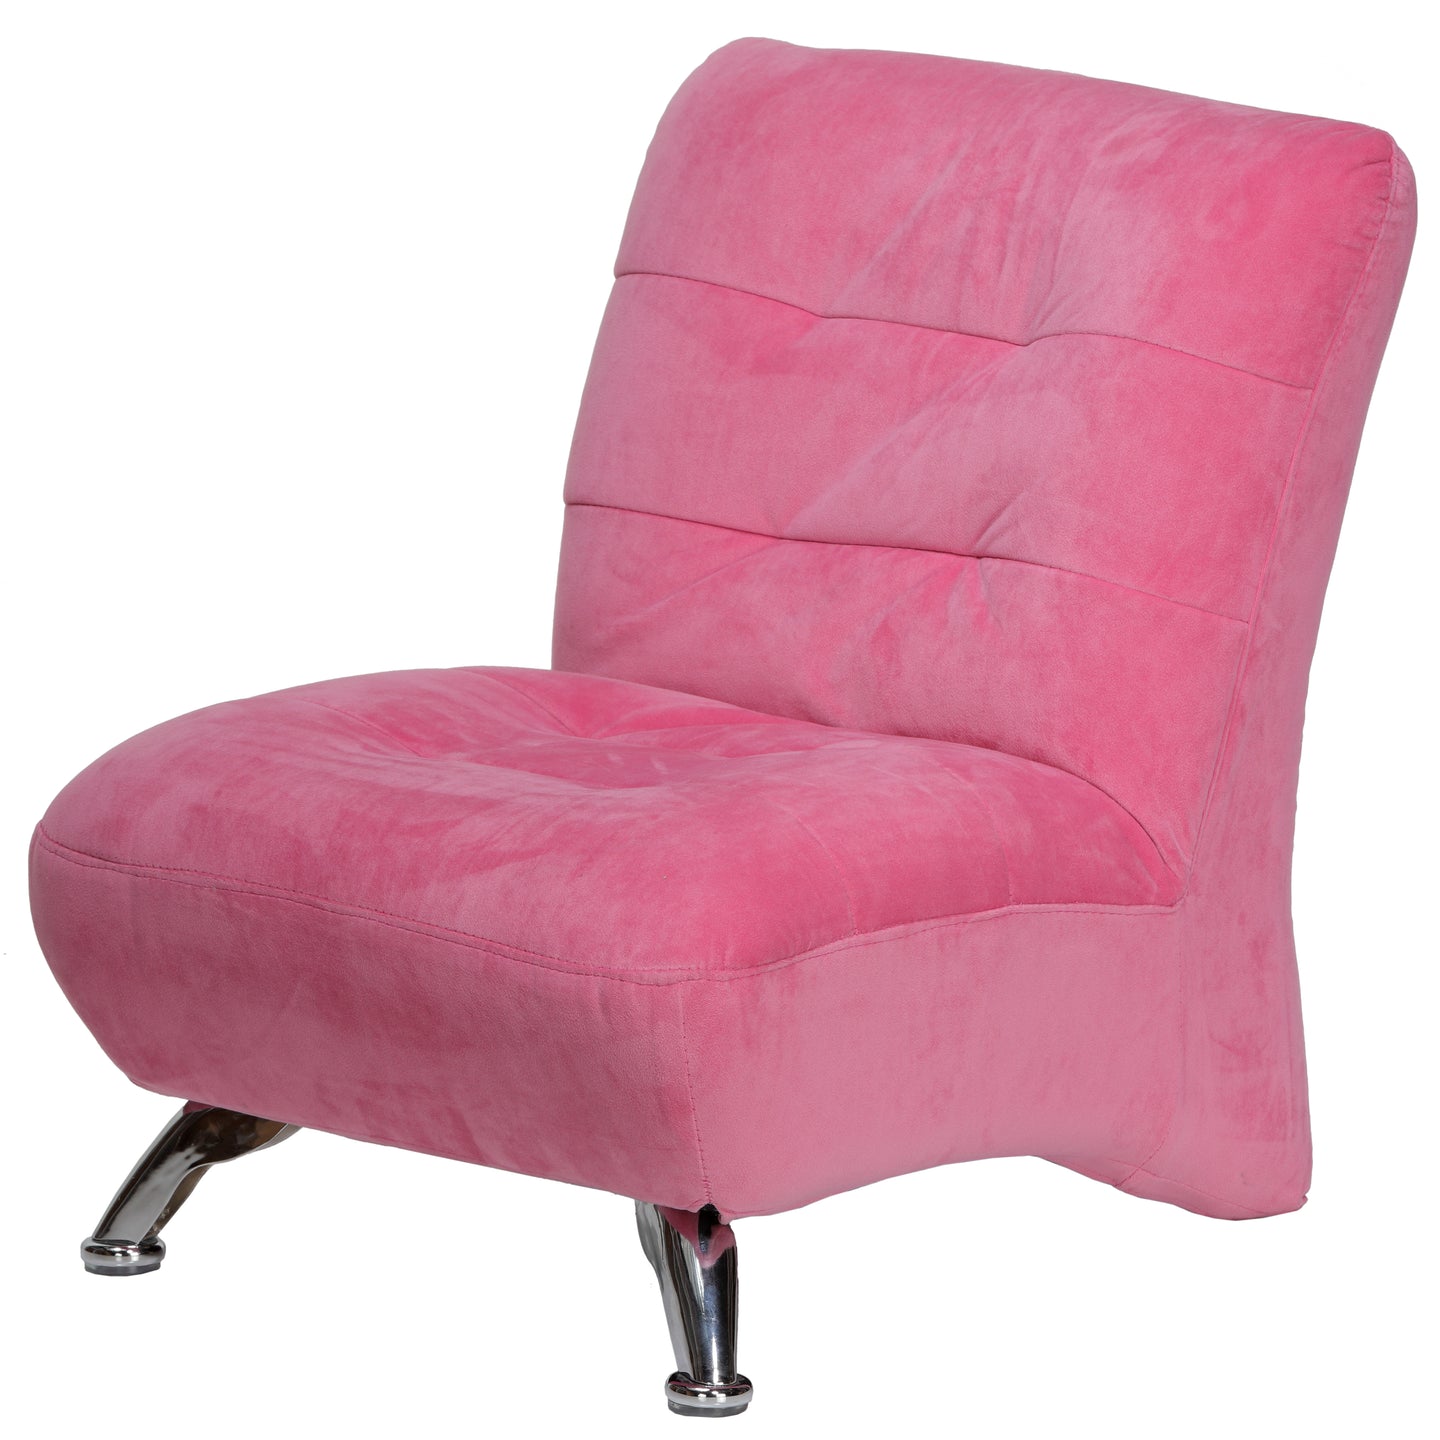 Cortesi Home Princess Kid's Chair, Pink Fabric